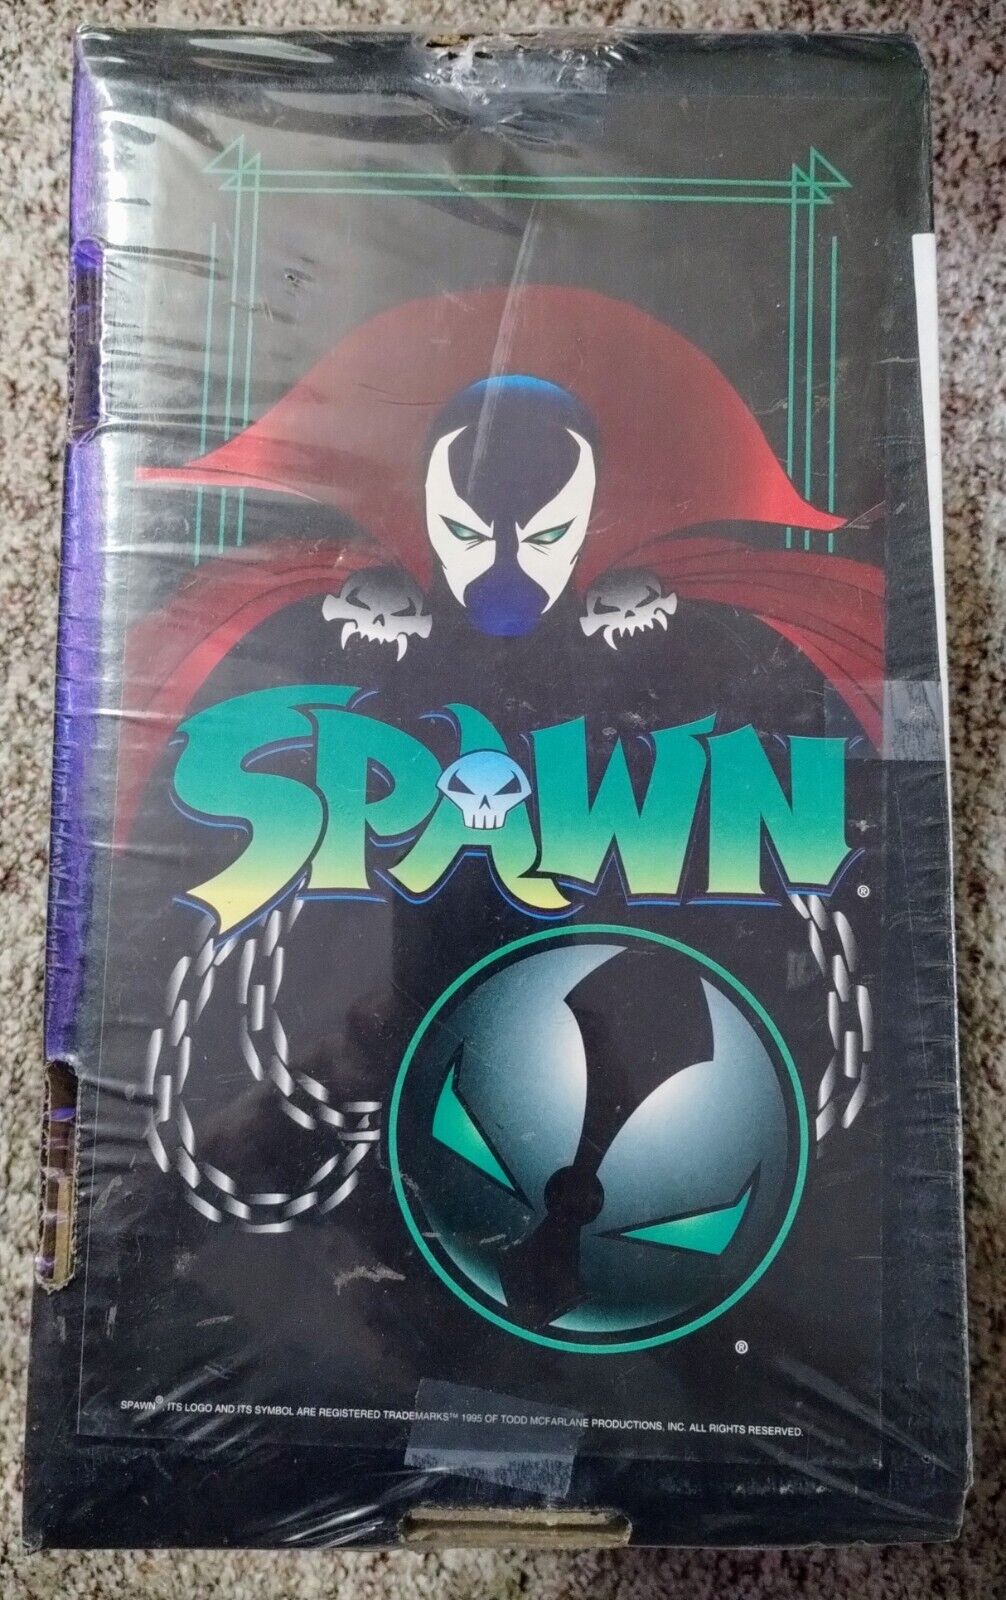 Image Pedigree Treat Spawn Comic Collectors Kit Box Unopened SUPER RARE GRAIL